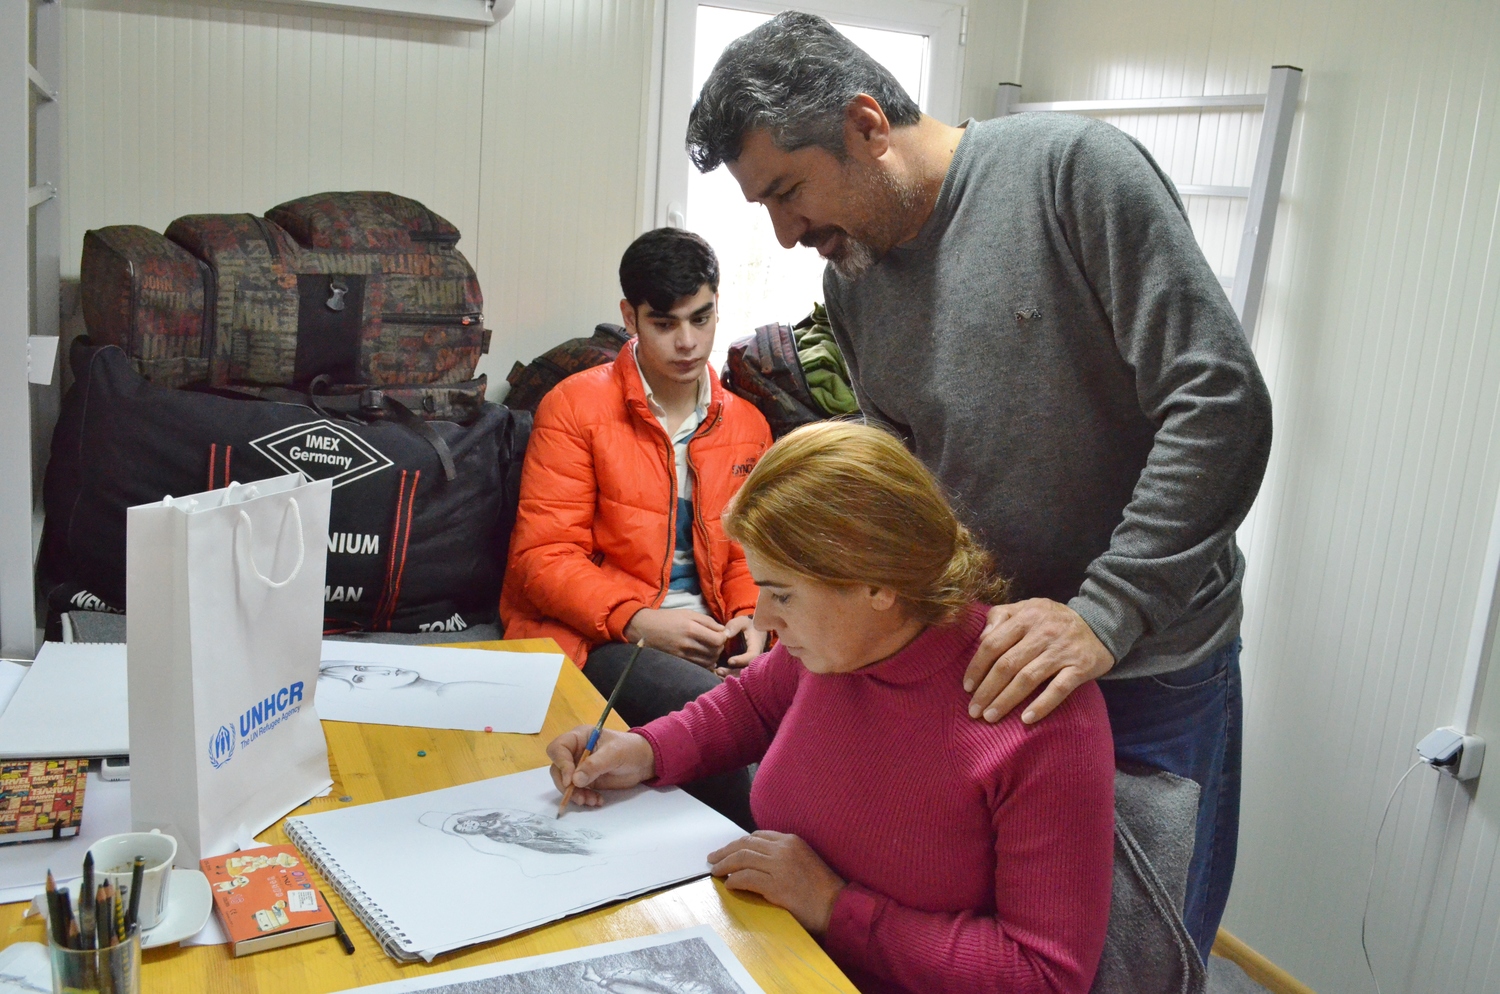 Former Yugoslav Republic of Macedonia. Syrian family keeps harmony despite difficult circumstances